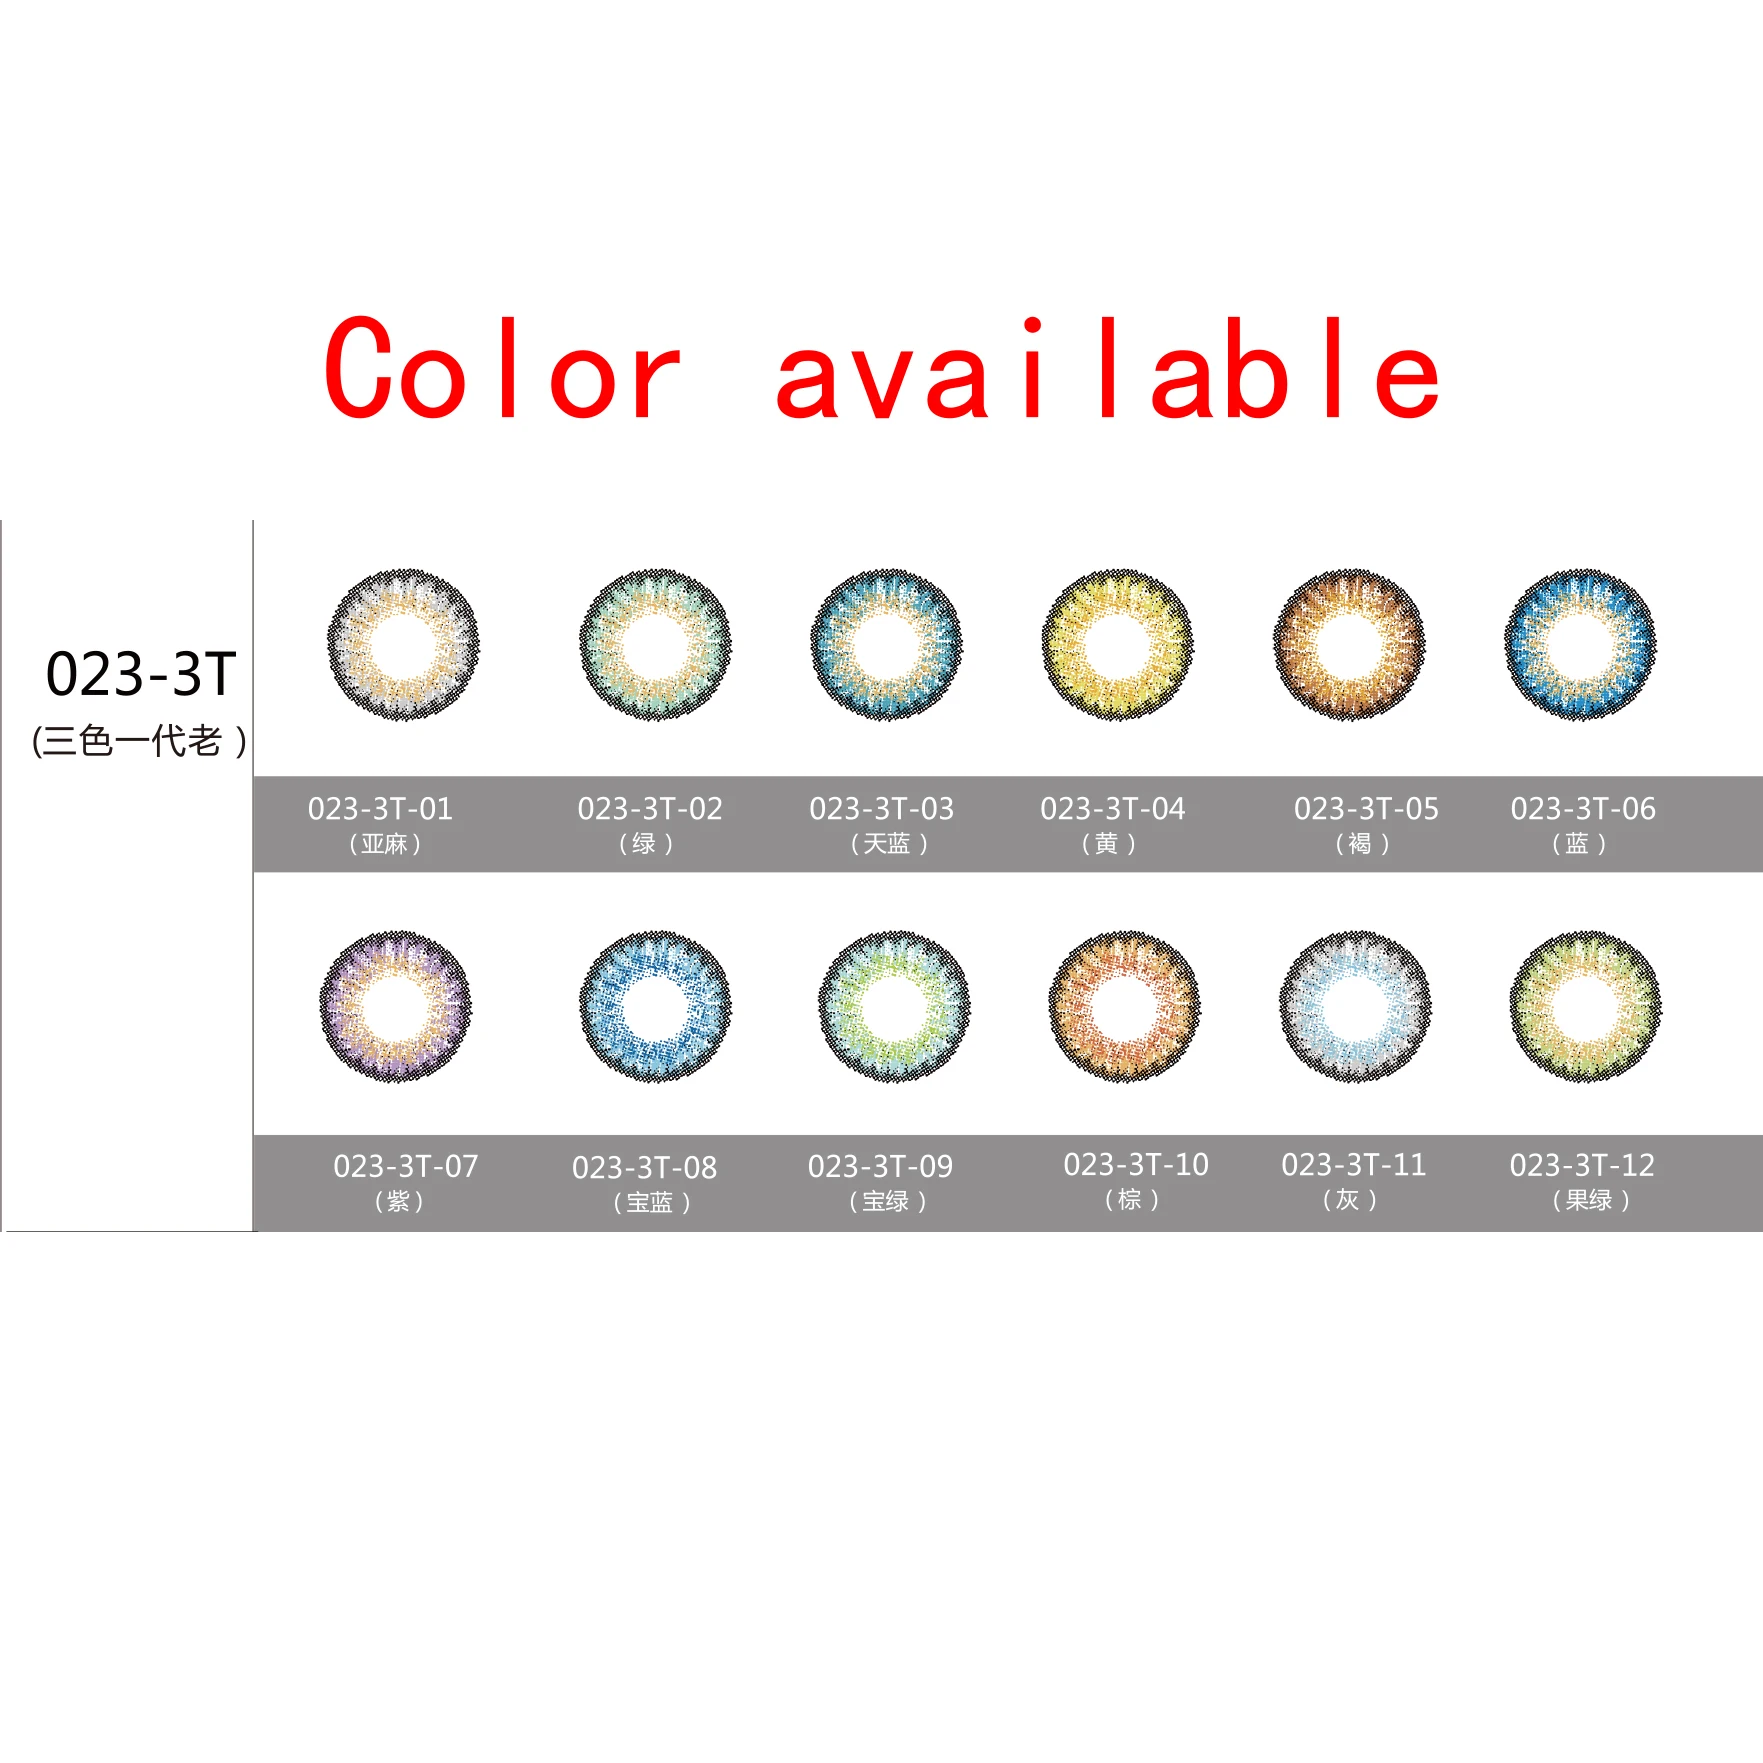 0233Tl Novmas Contact Lenses Wholesale Fresh 12 Color Beautiful Contact Lens Hot Sells Lens In Malaysia